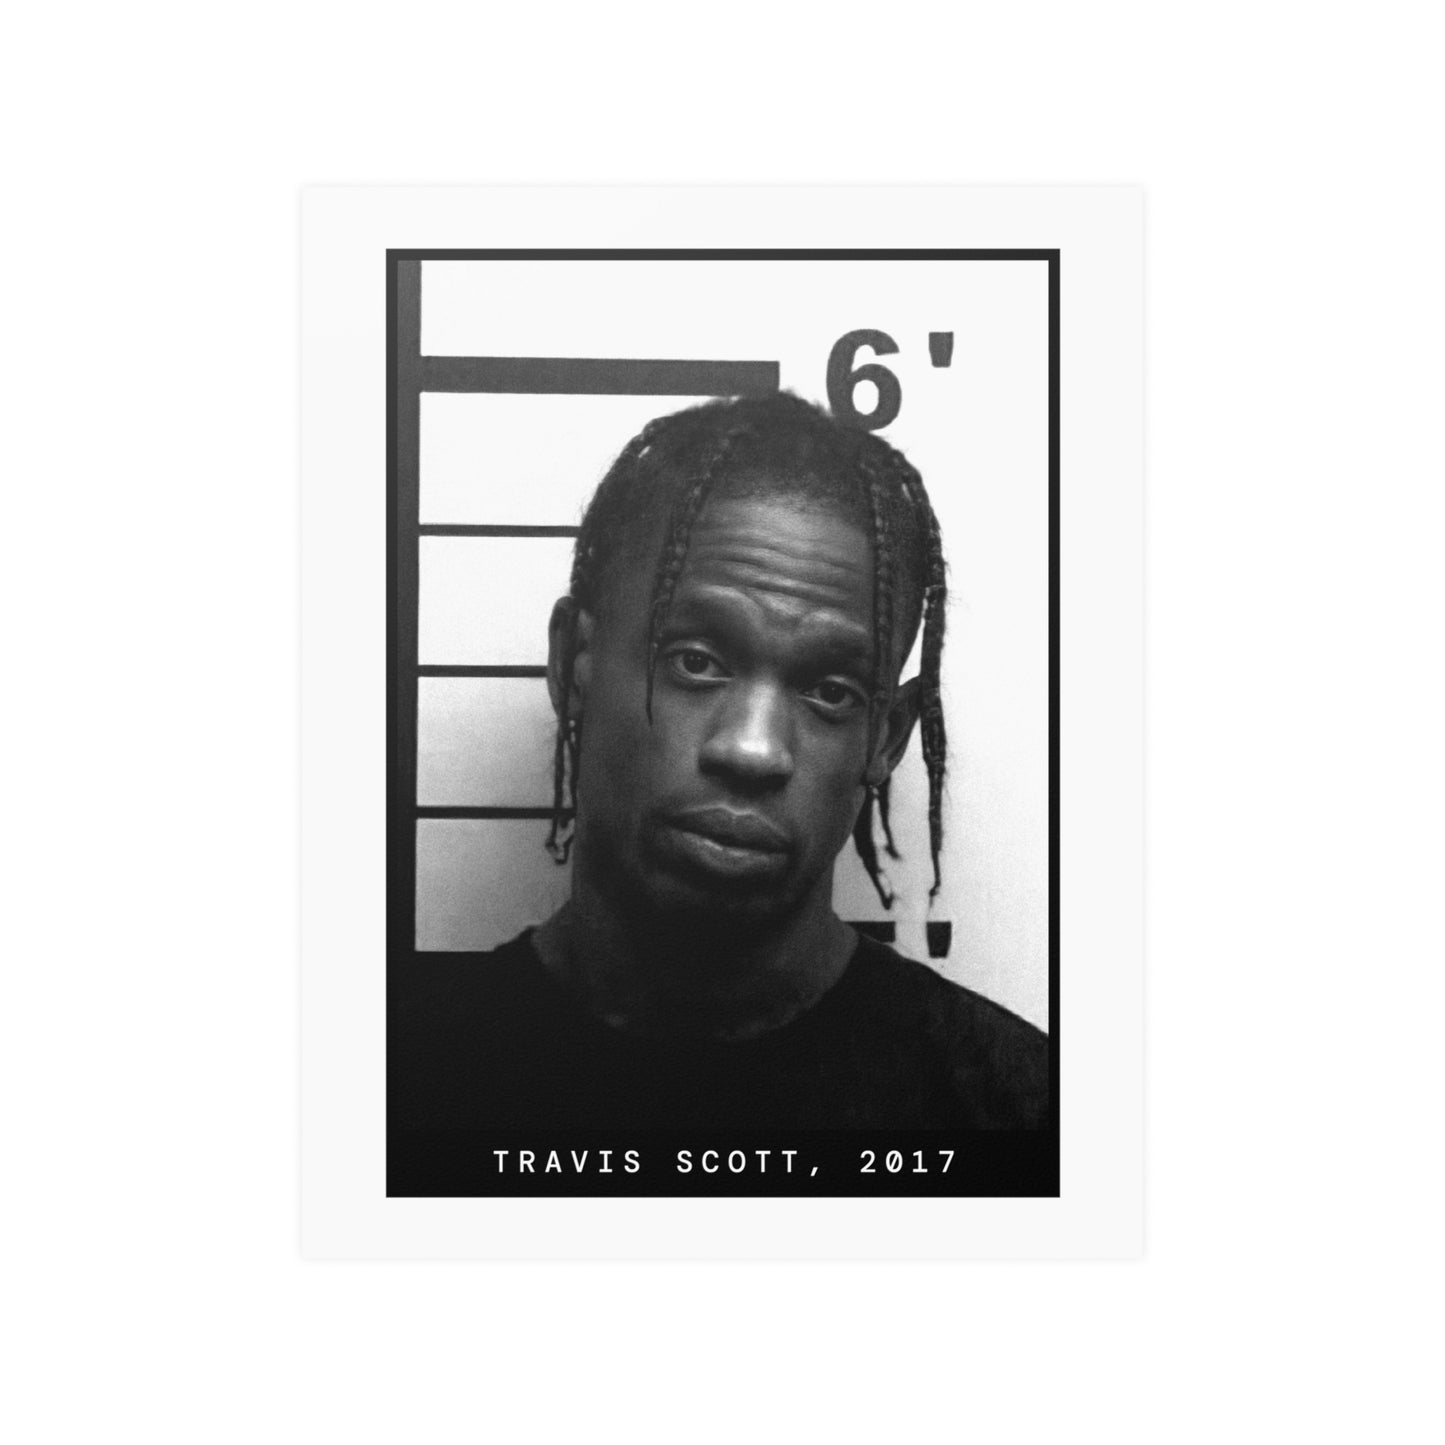 Travis Scott, 2017 Rapper Mugshot Poster